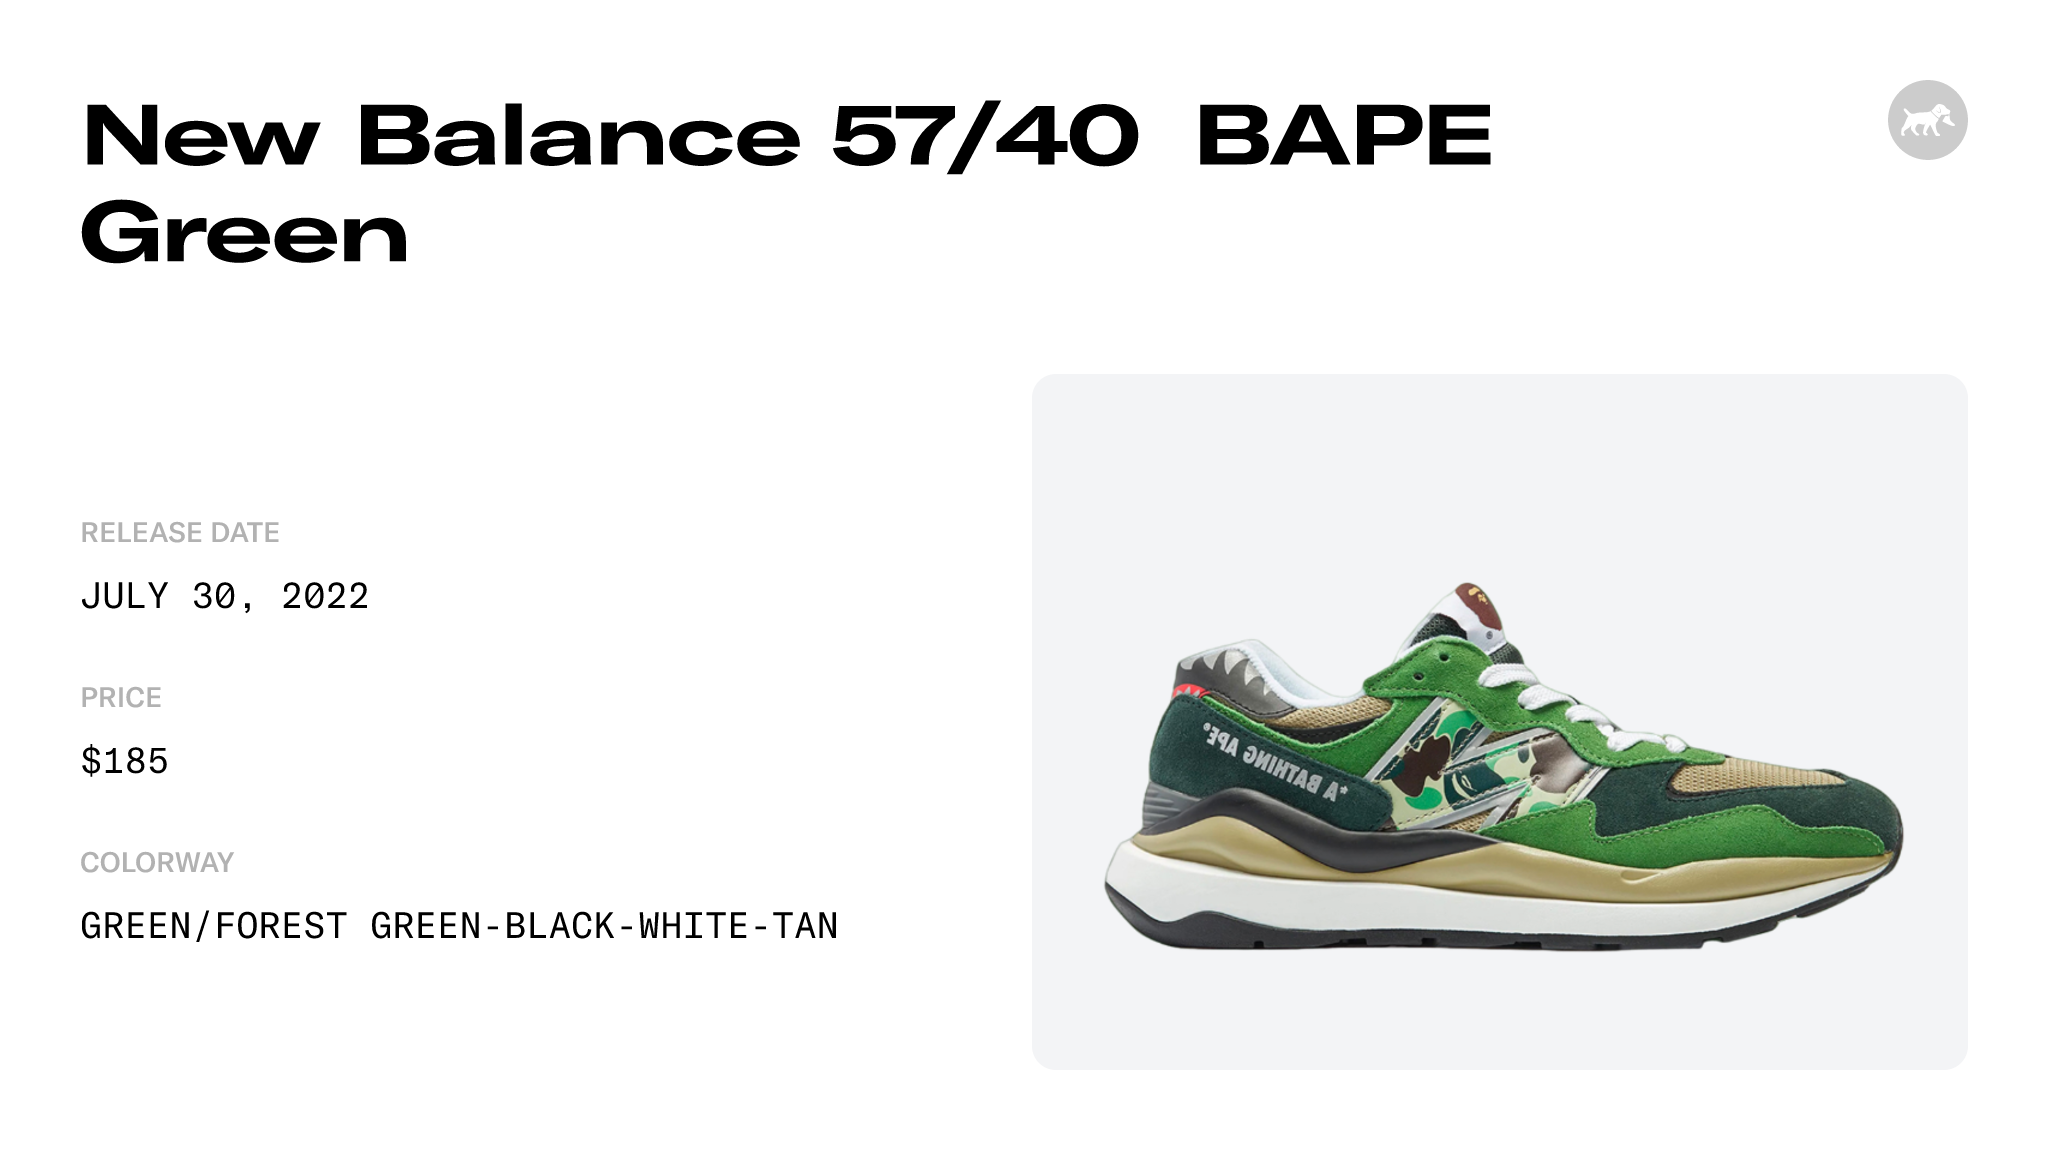 New Balance 57/40 BAPE Green Raffles and Release Date